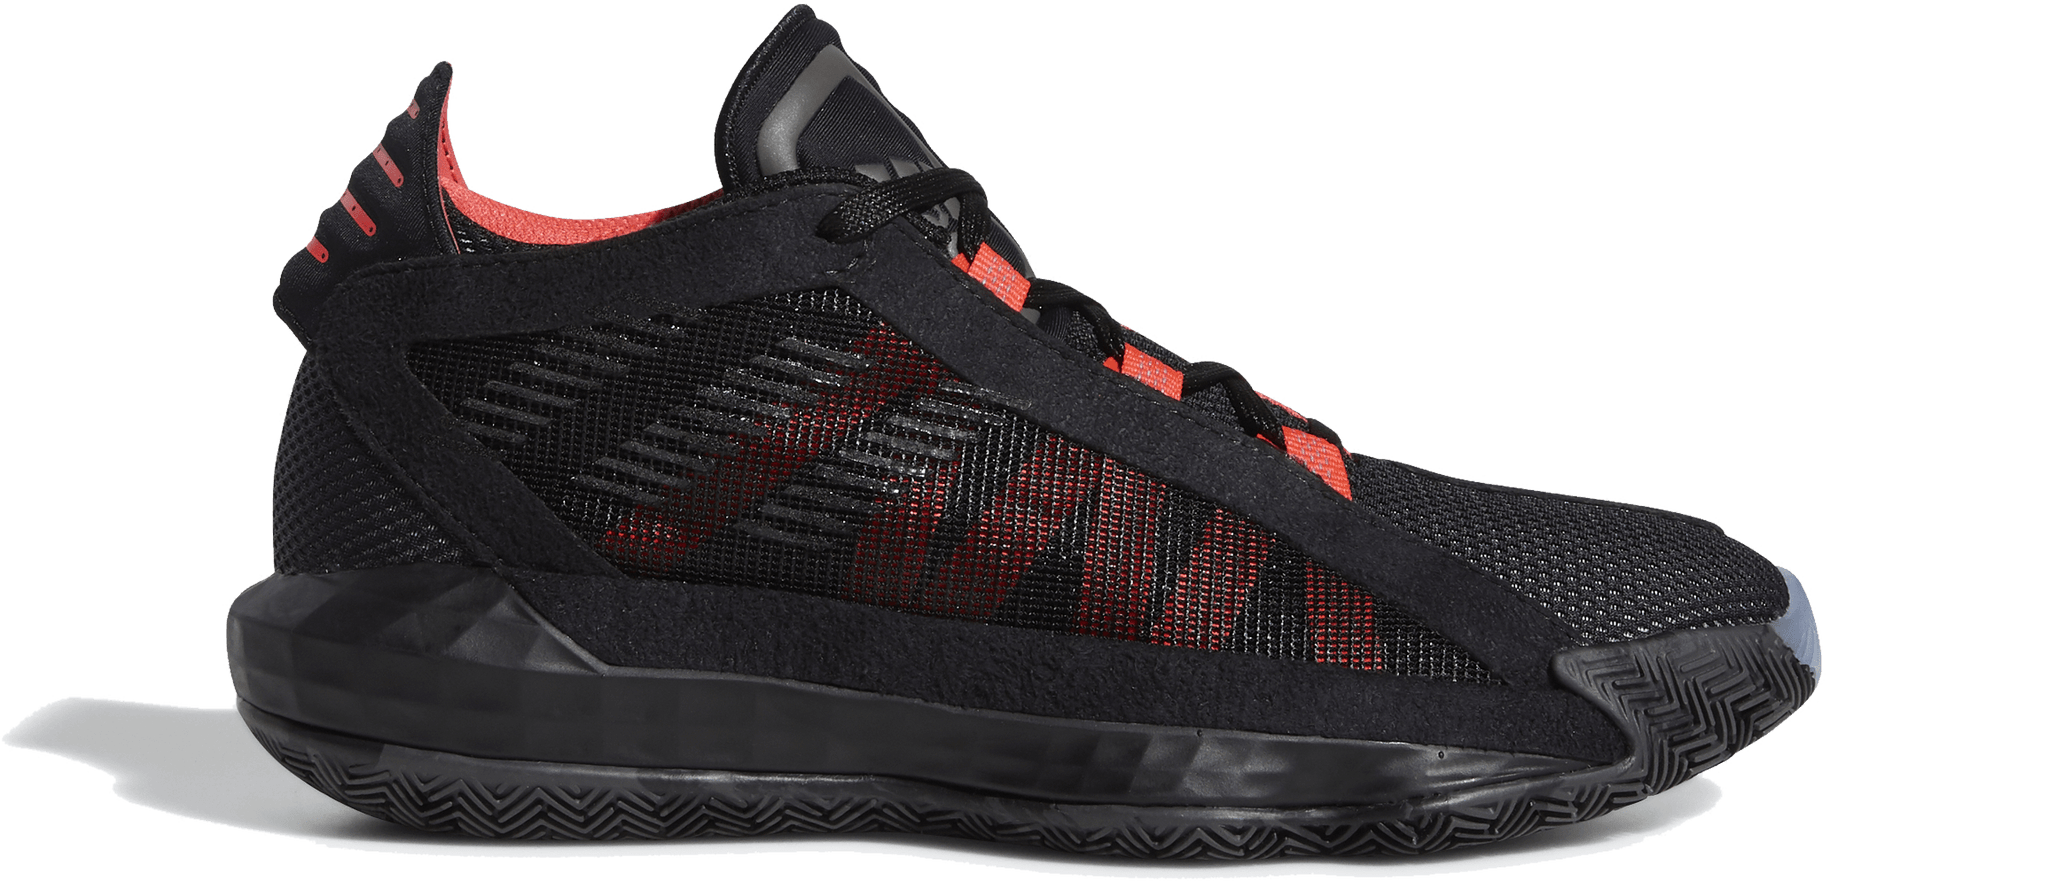 men's adidas dame 6 basketball shoes